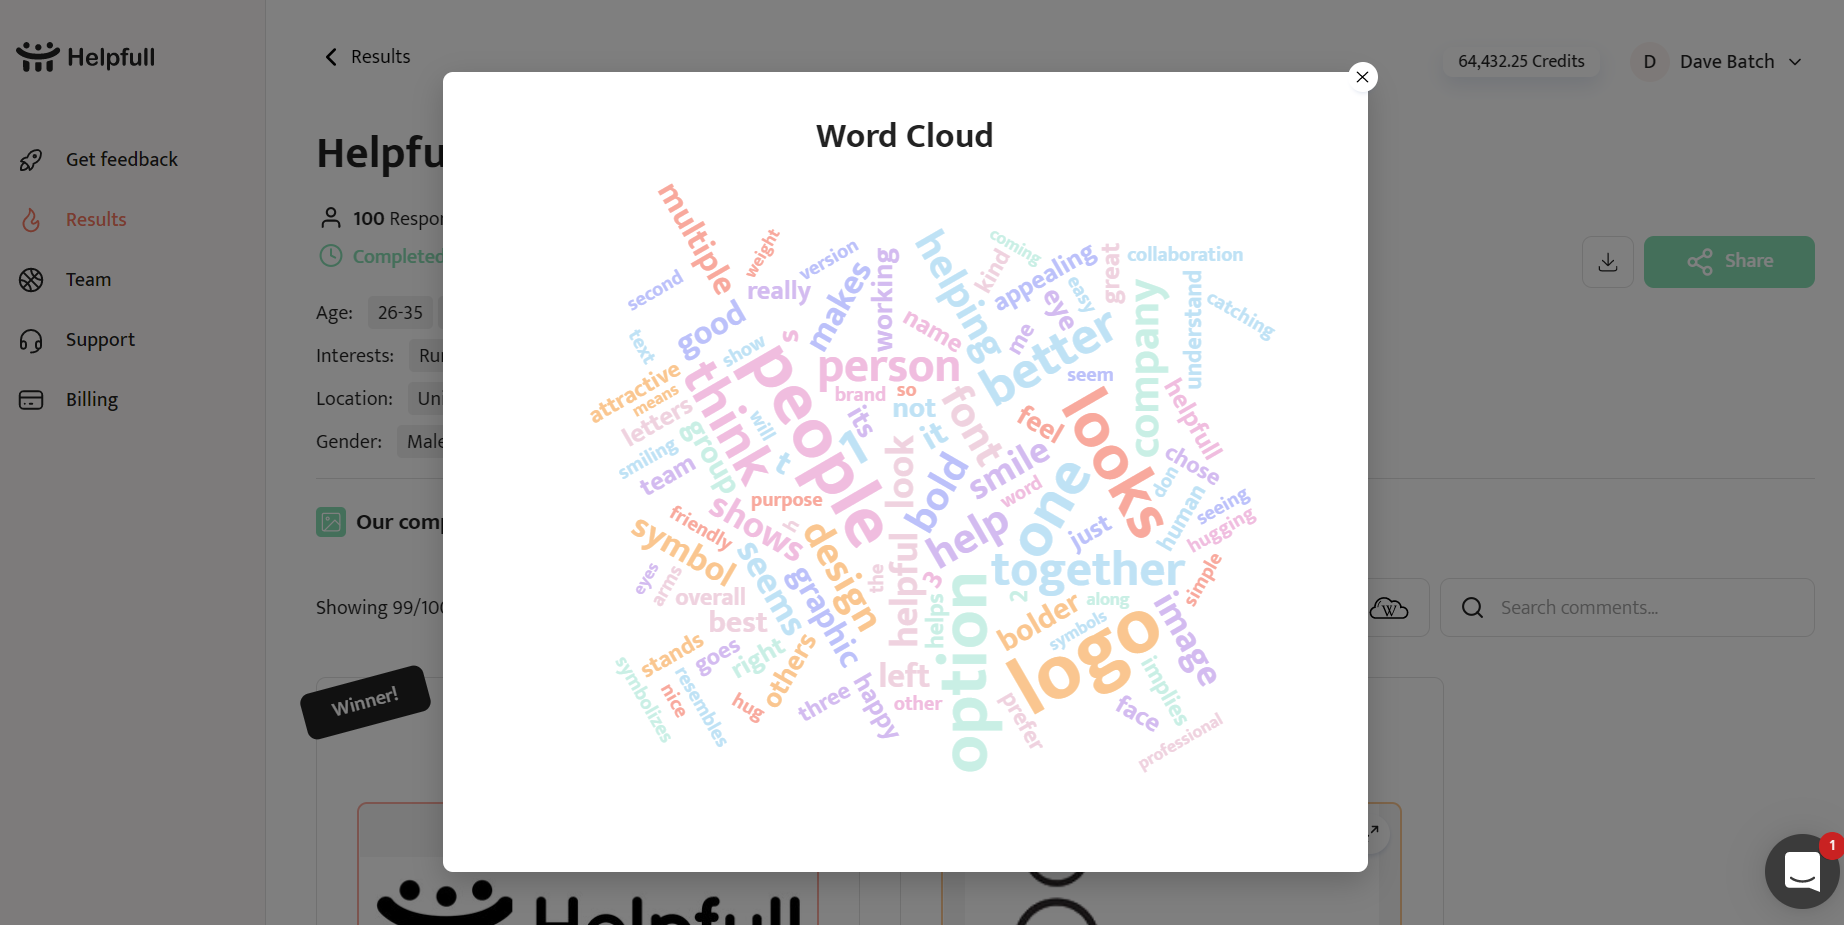 The survey Word Cloud